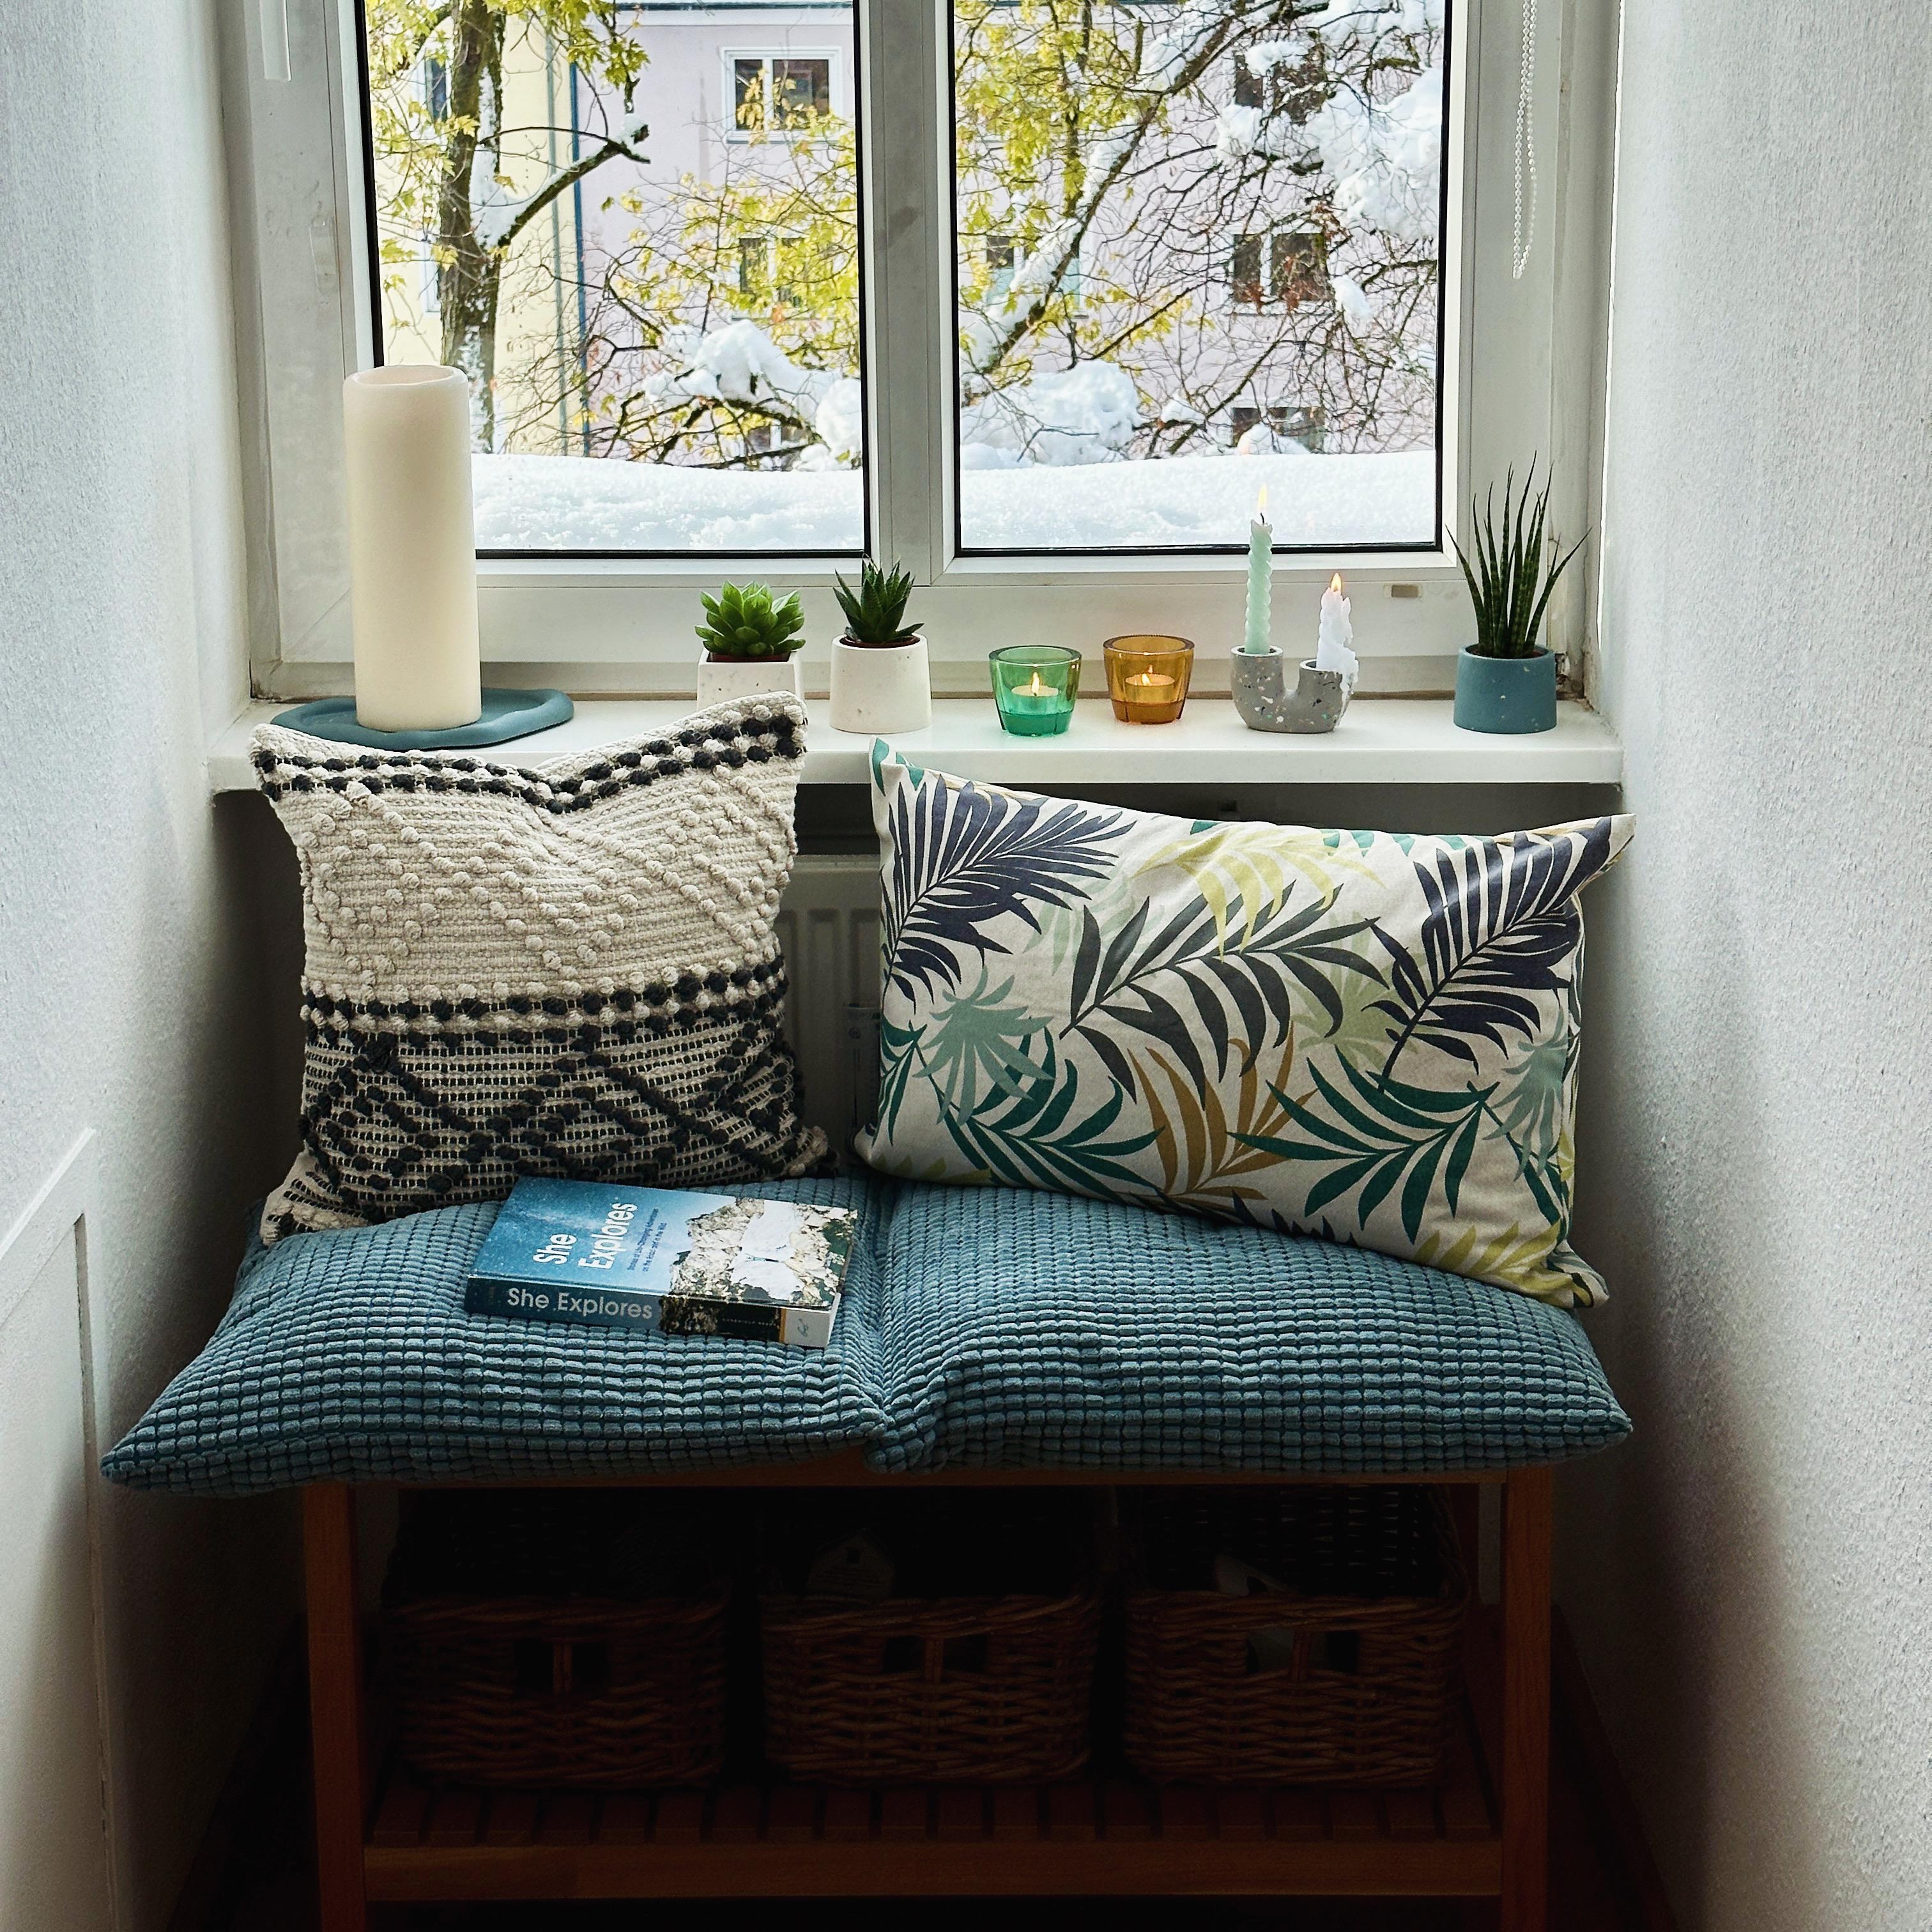 Cozy time 🤍
#leseecke #wohnzimmer #couchstyle #dachgeschoss #skandi